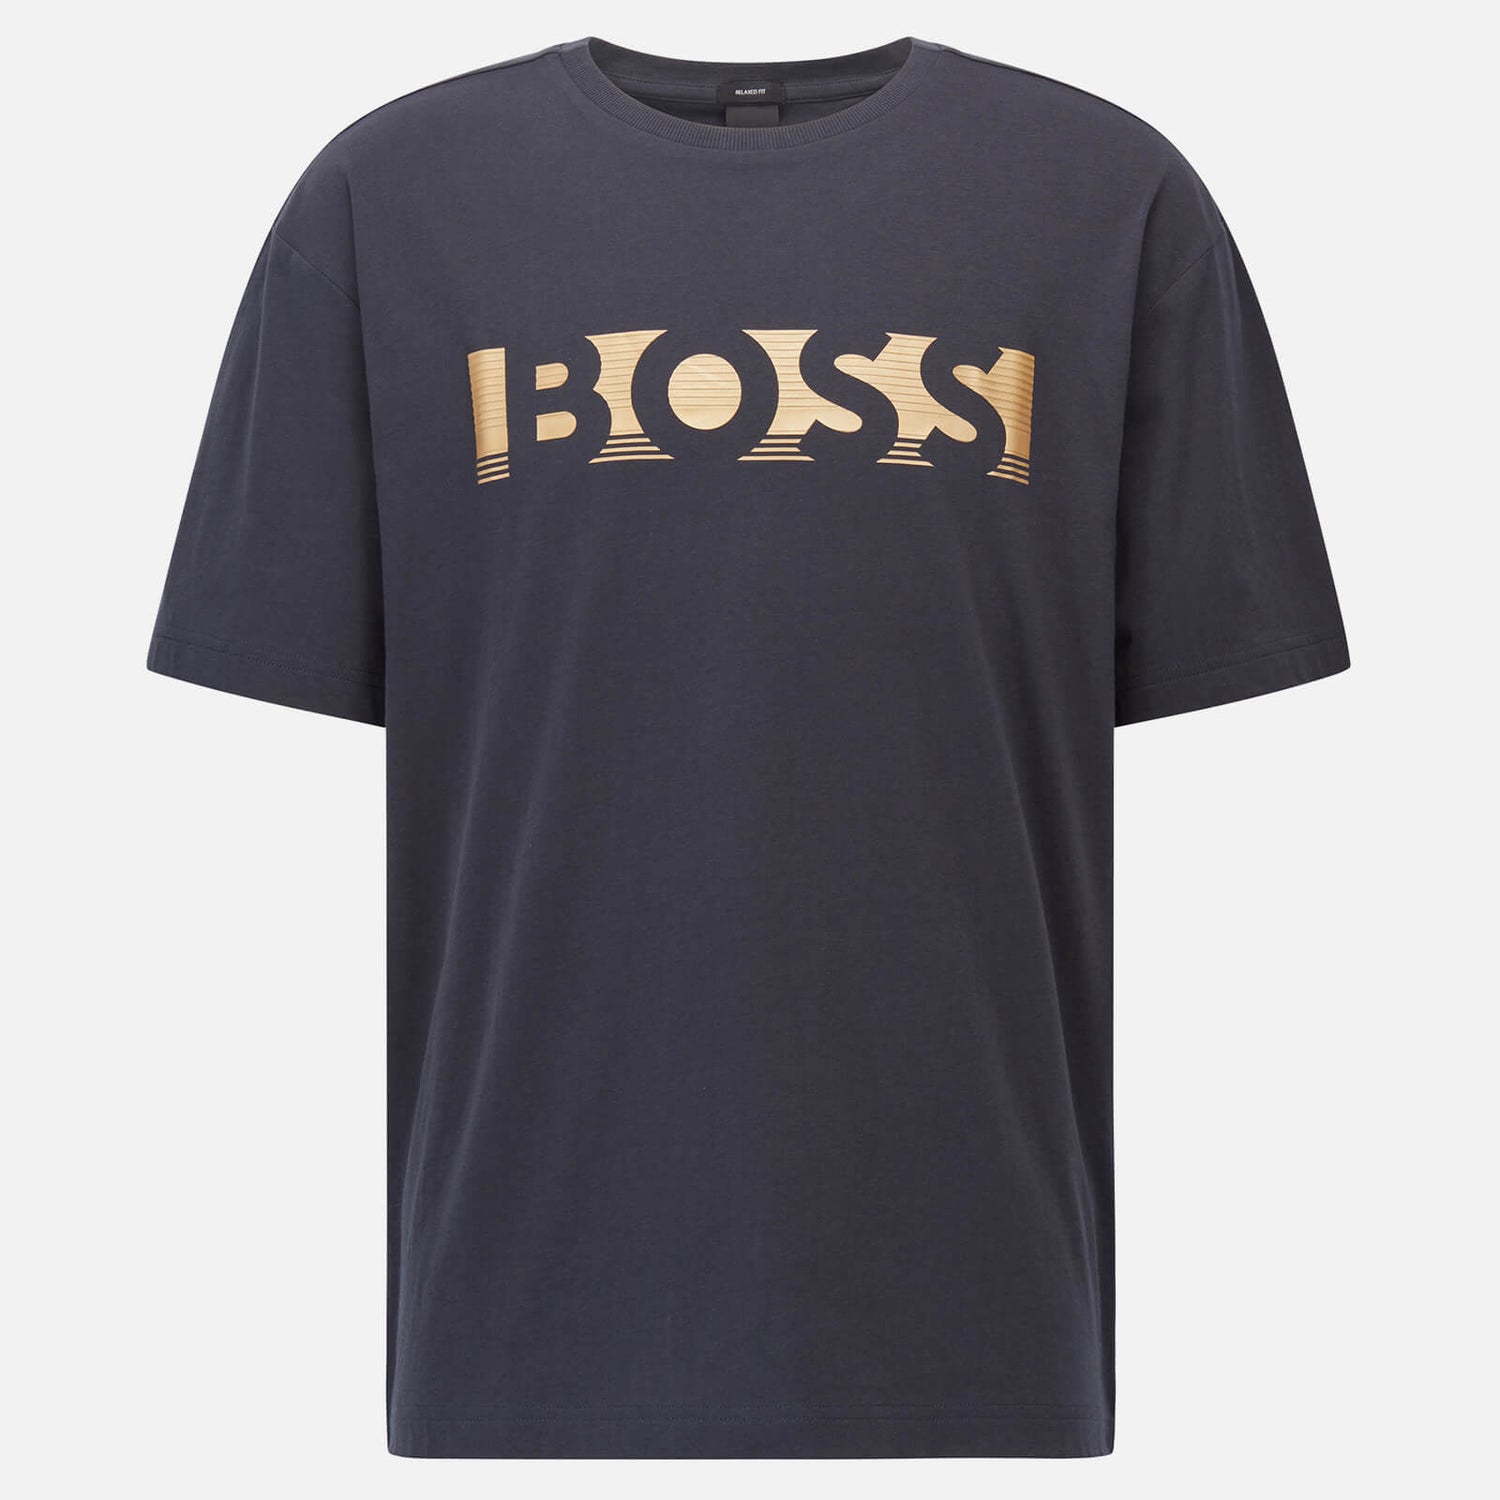 BOSS Athleisure Men's T-Shirt 1 - Dark Blue - S